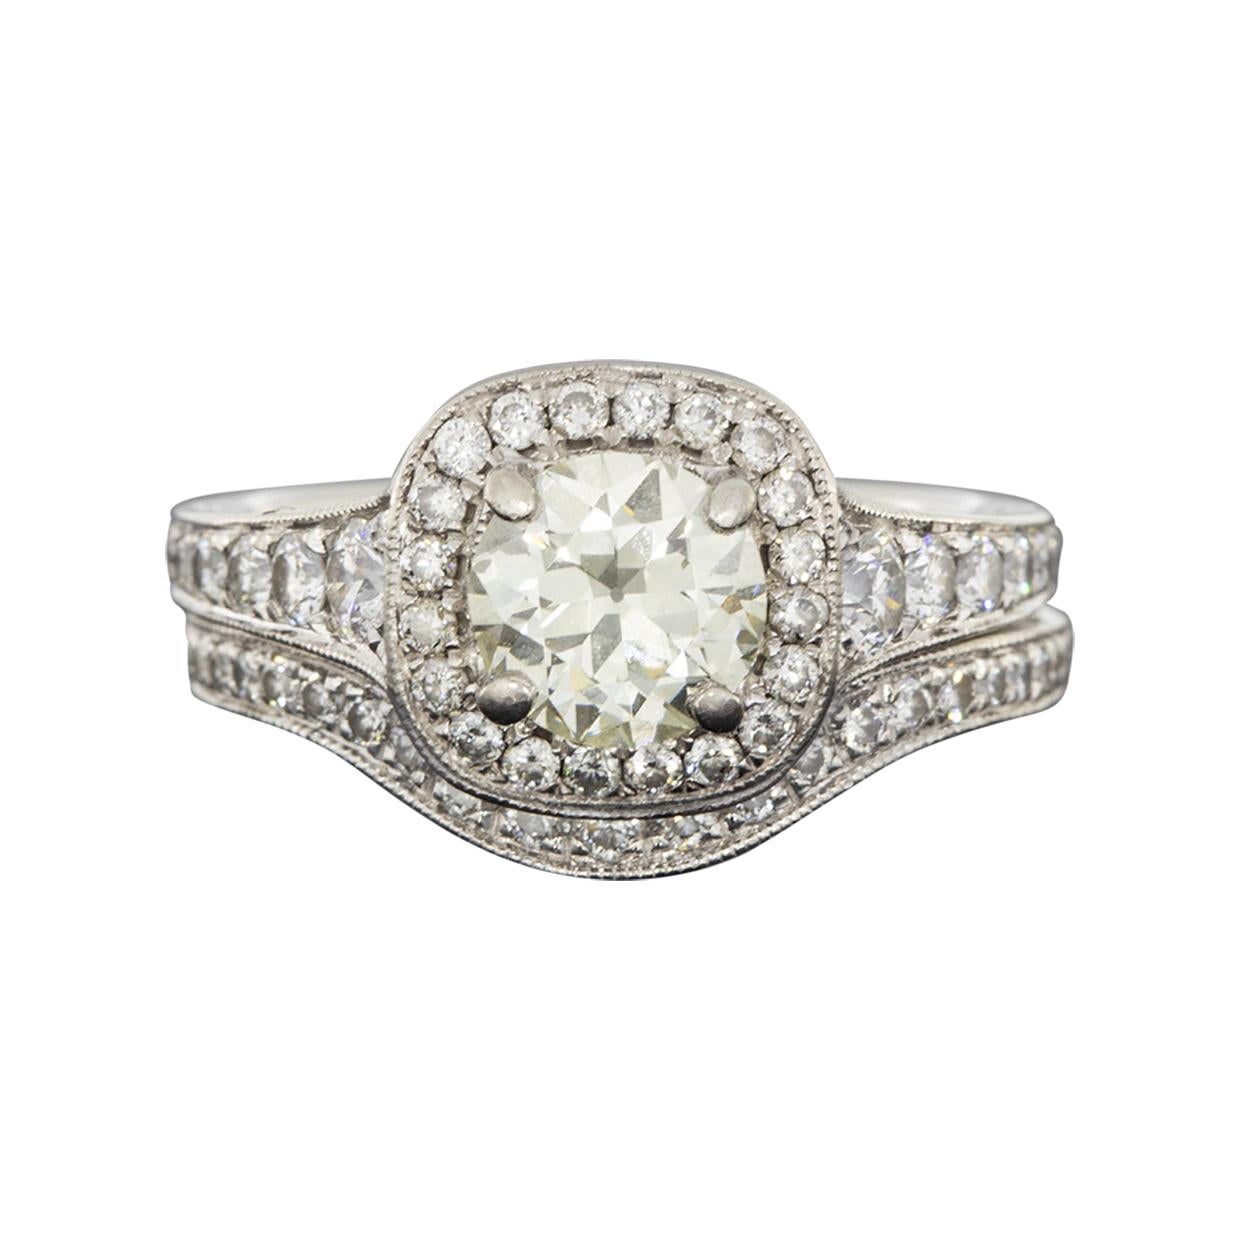 White Gold 1.90 Carat Round Diamond Halo Engagement Ring & Wedding Band Set For Sale